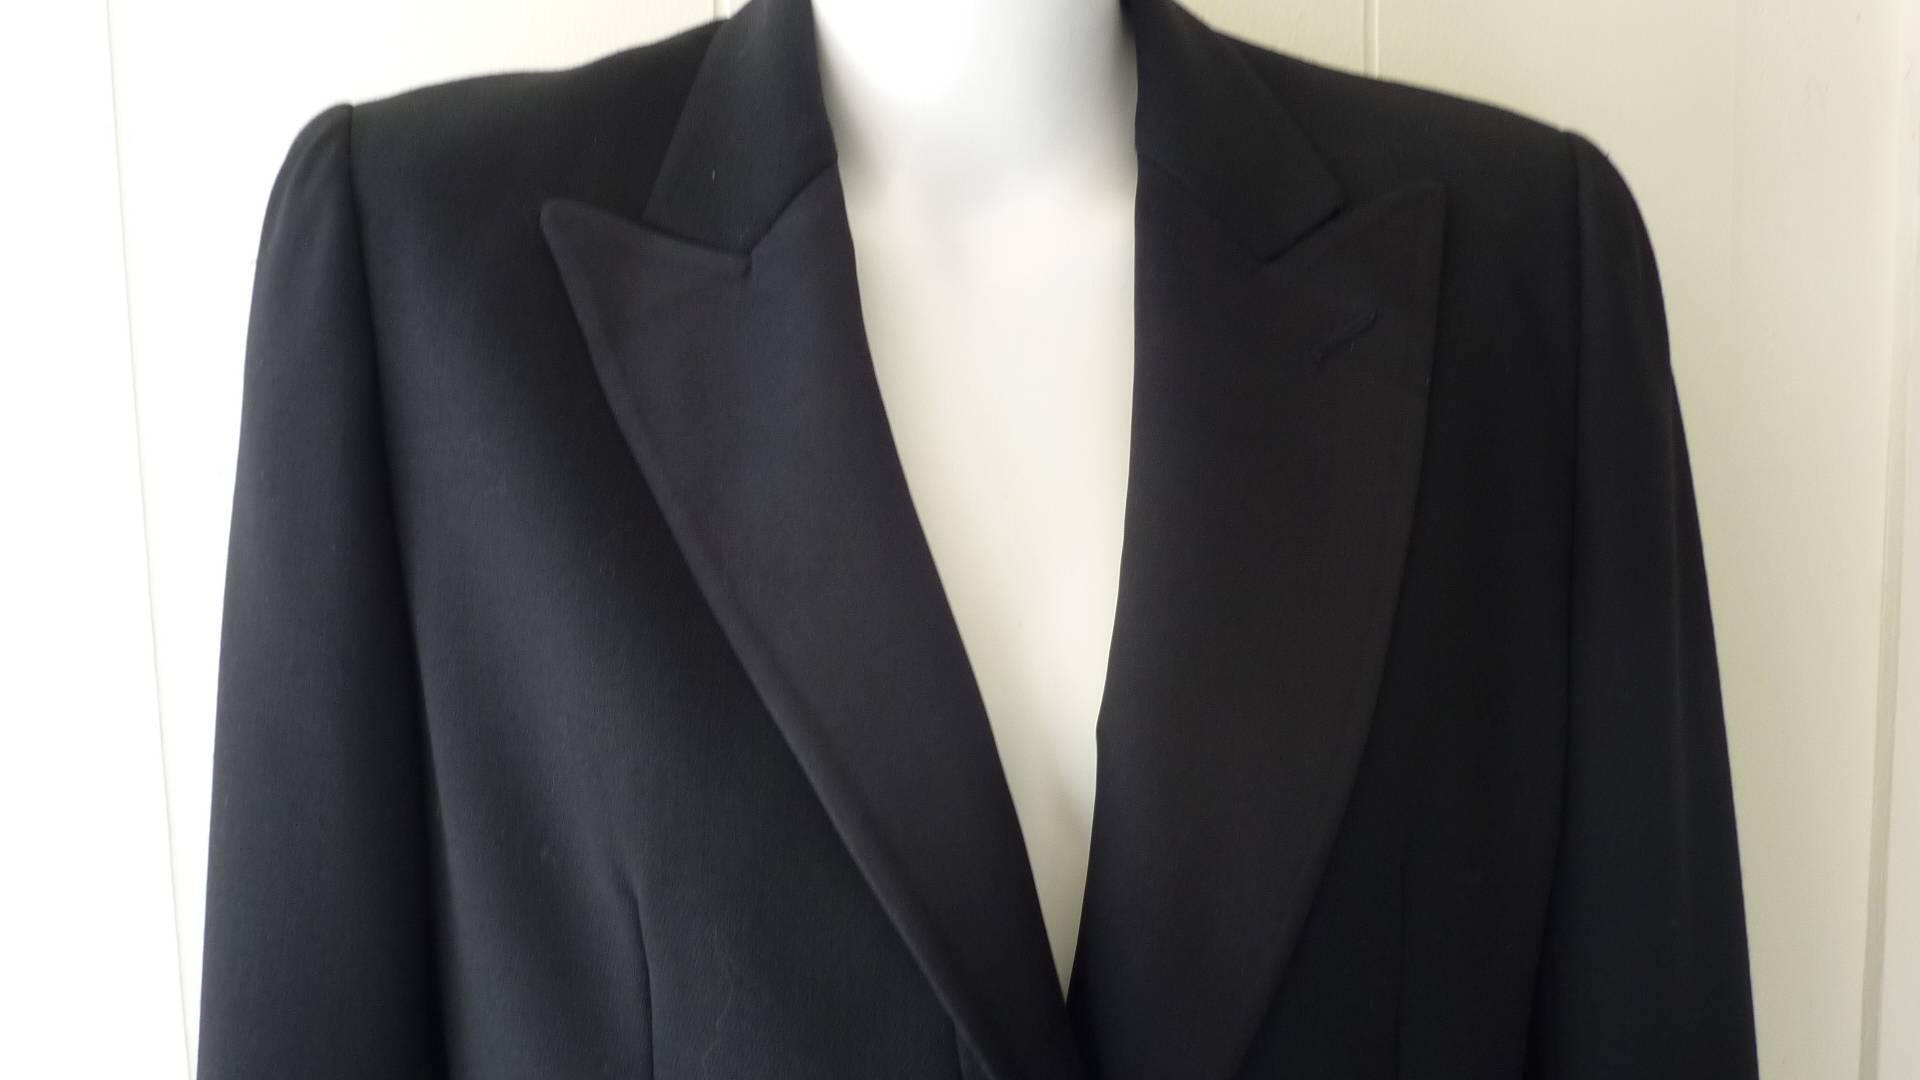 Women's 1990s Giorgio Armani Black Tuxedo Wool Pant Suit (12 US)